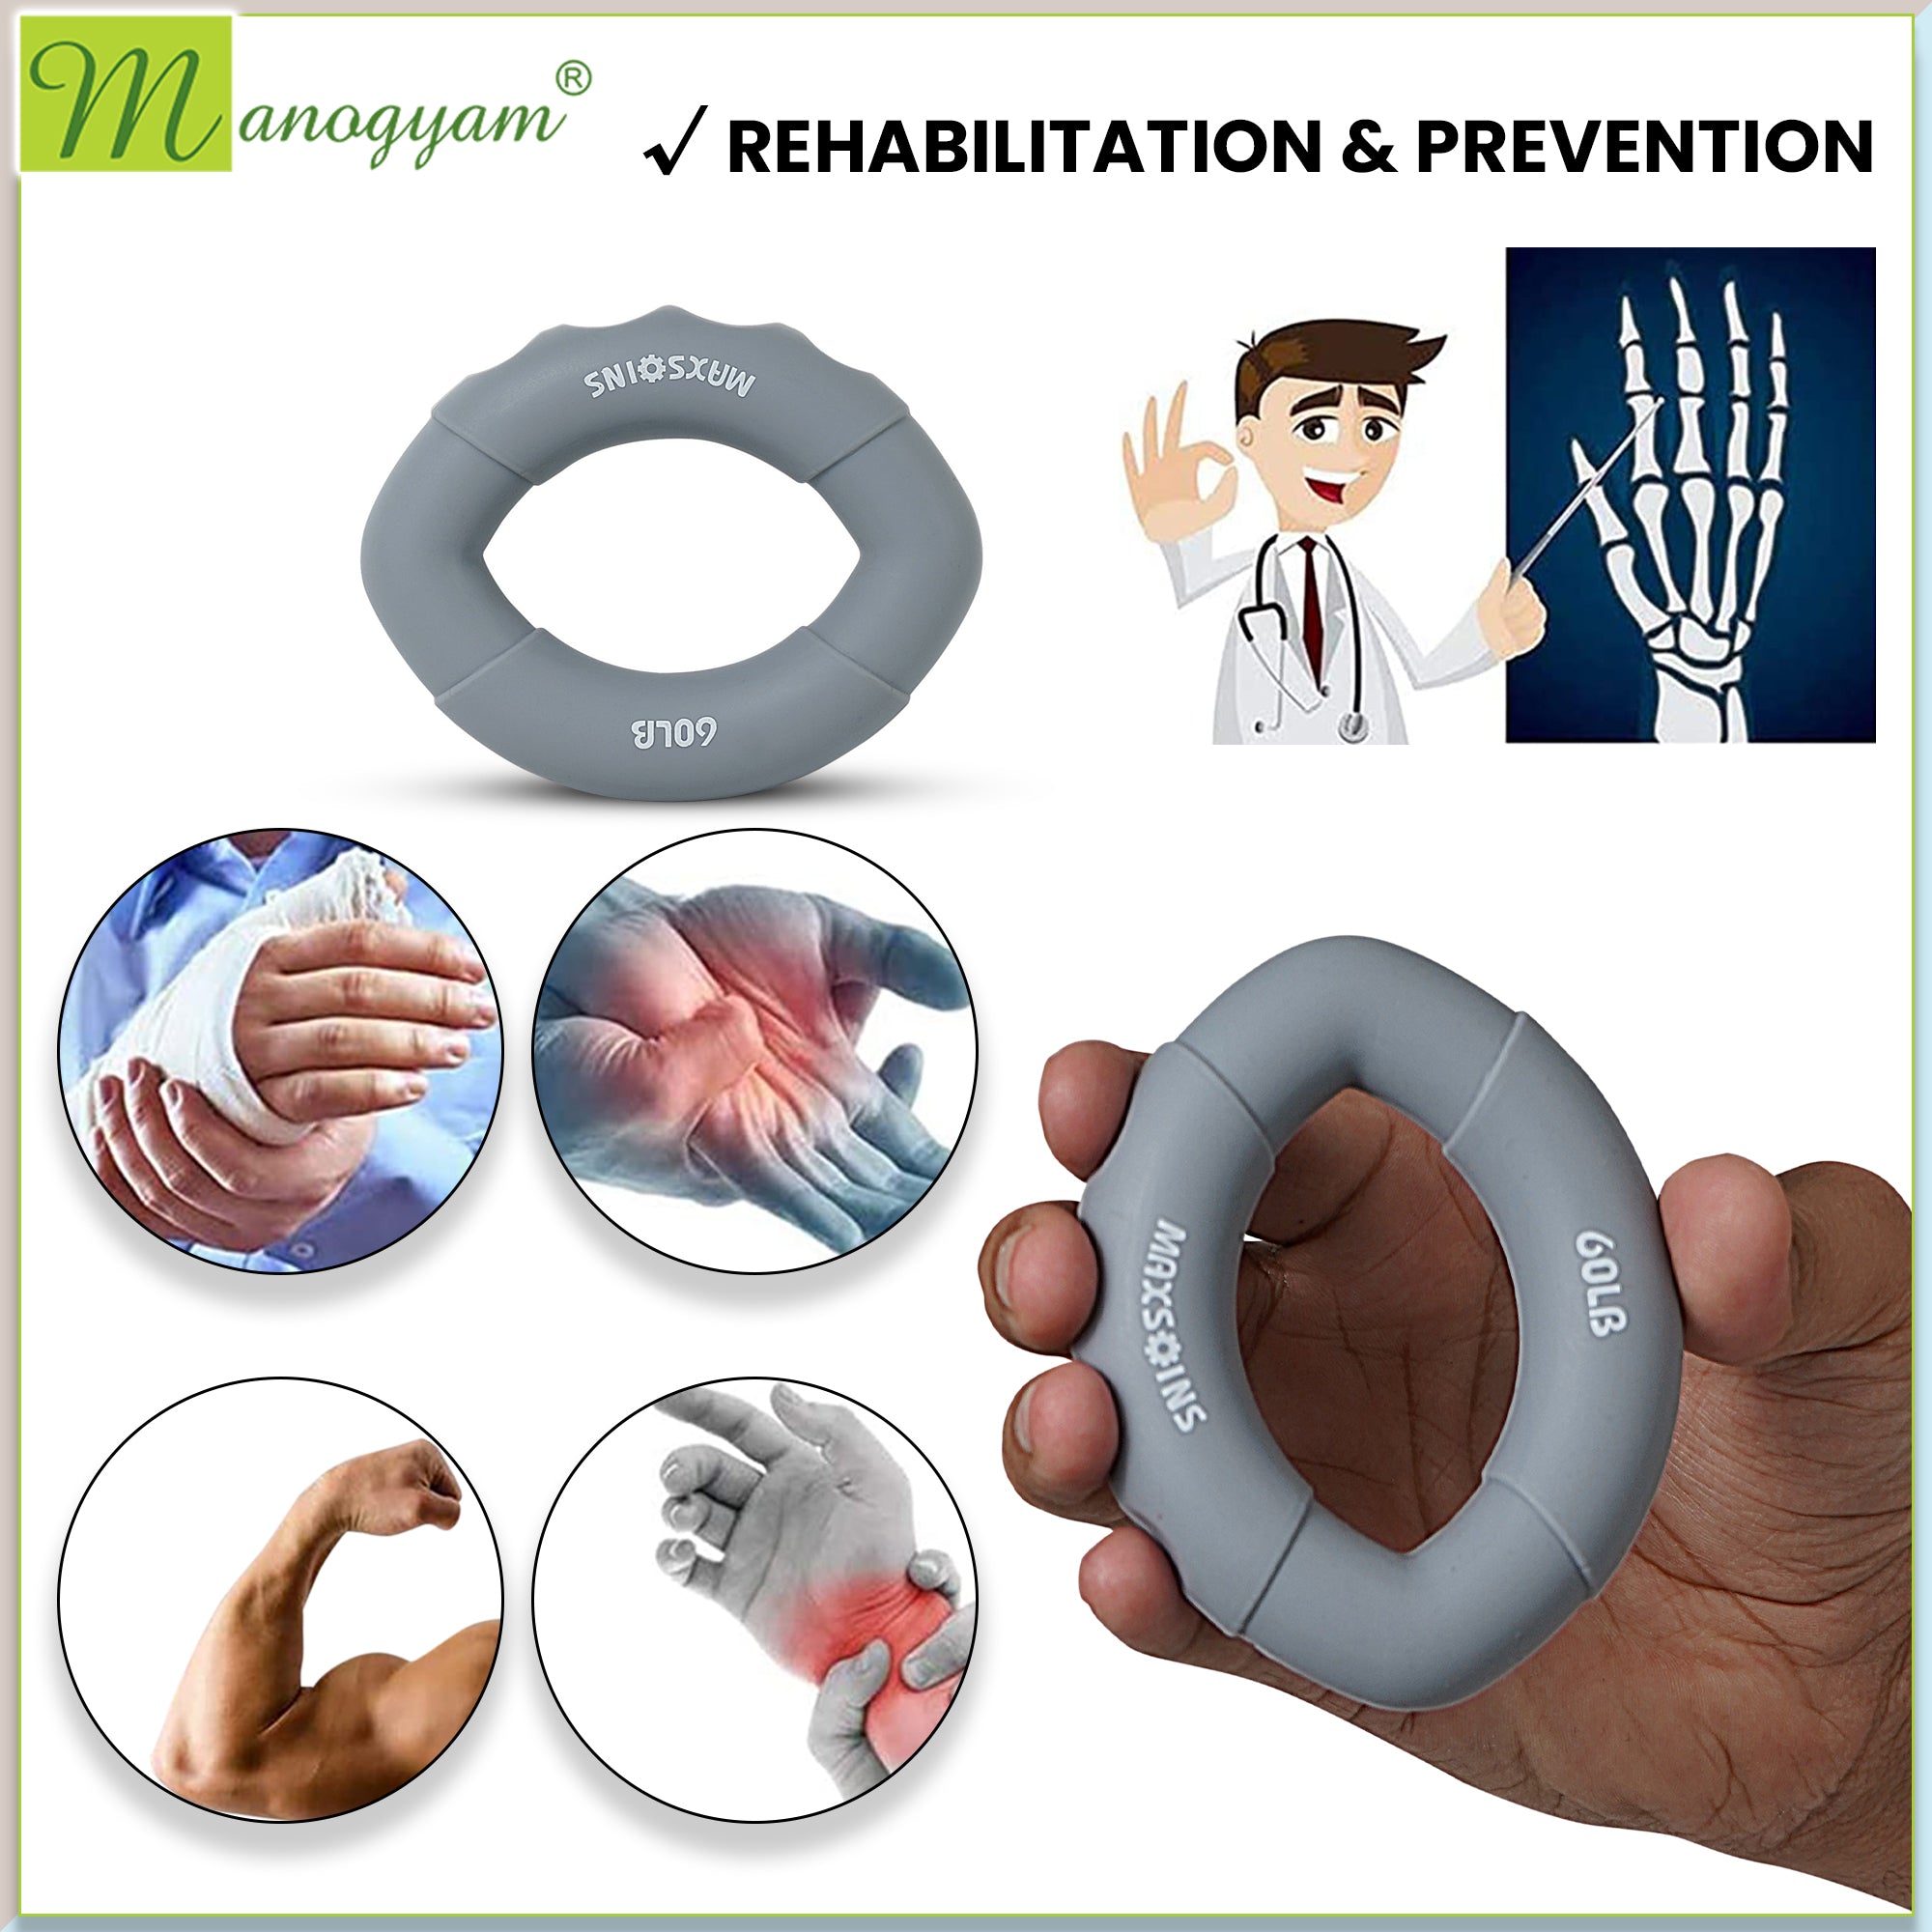 Manogyam Professional Palm Stretcher: Improve Flexibility and Prevent Injury